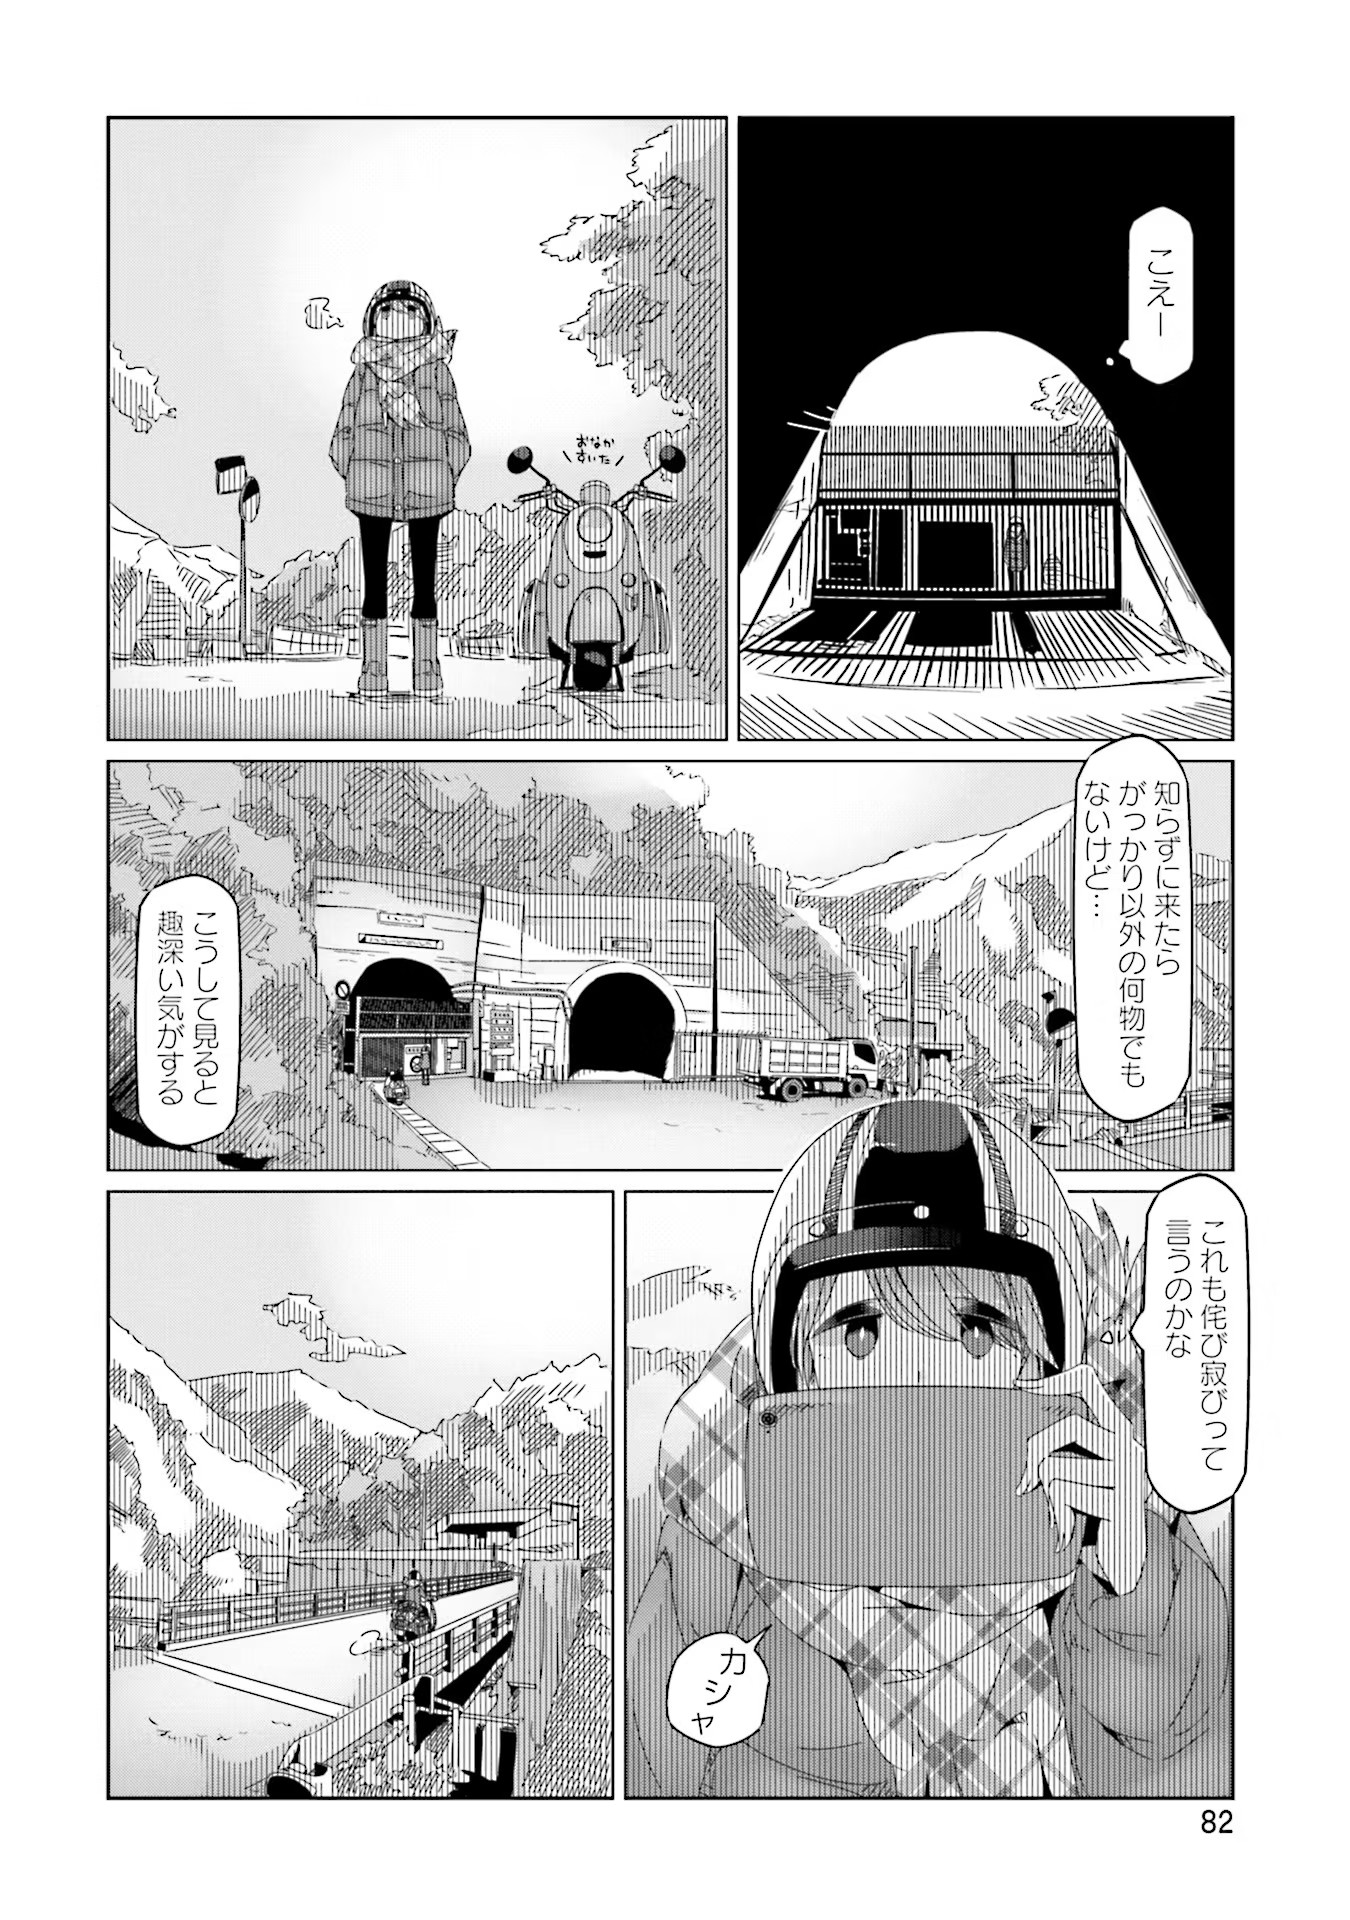 Yuru Camp - Chapter 38 - Page 2